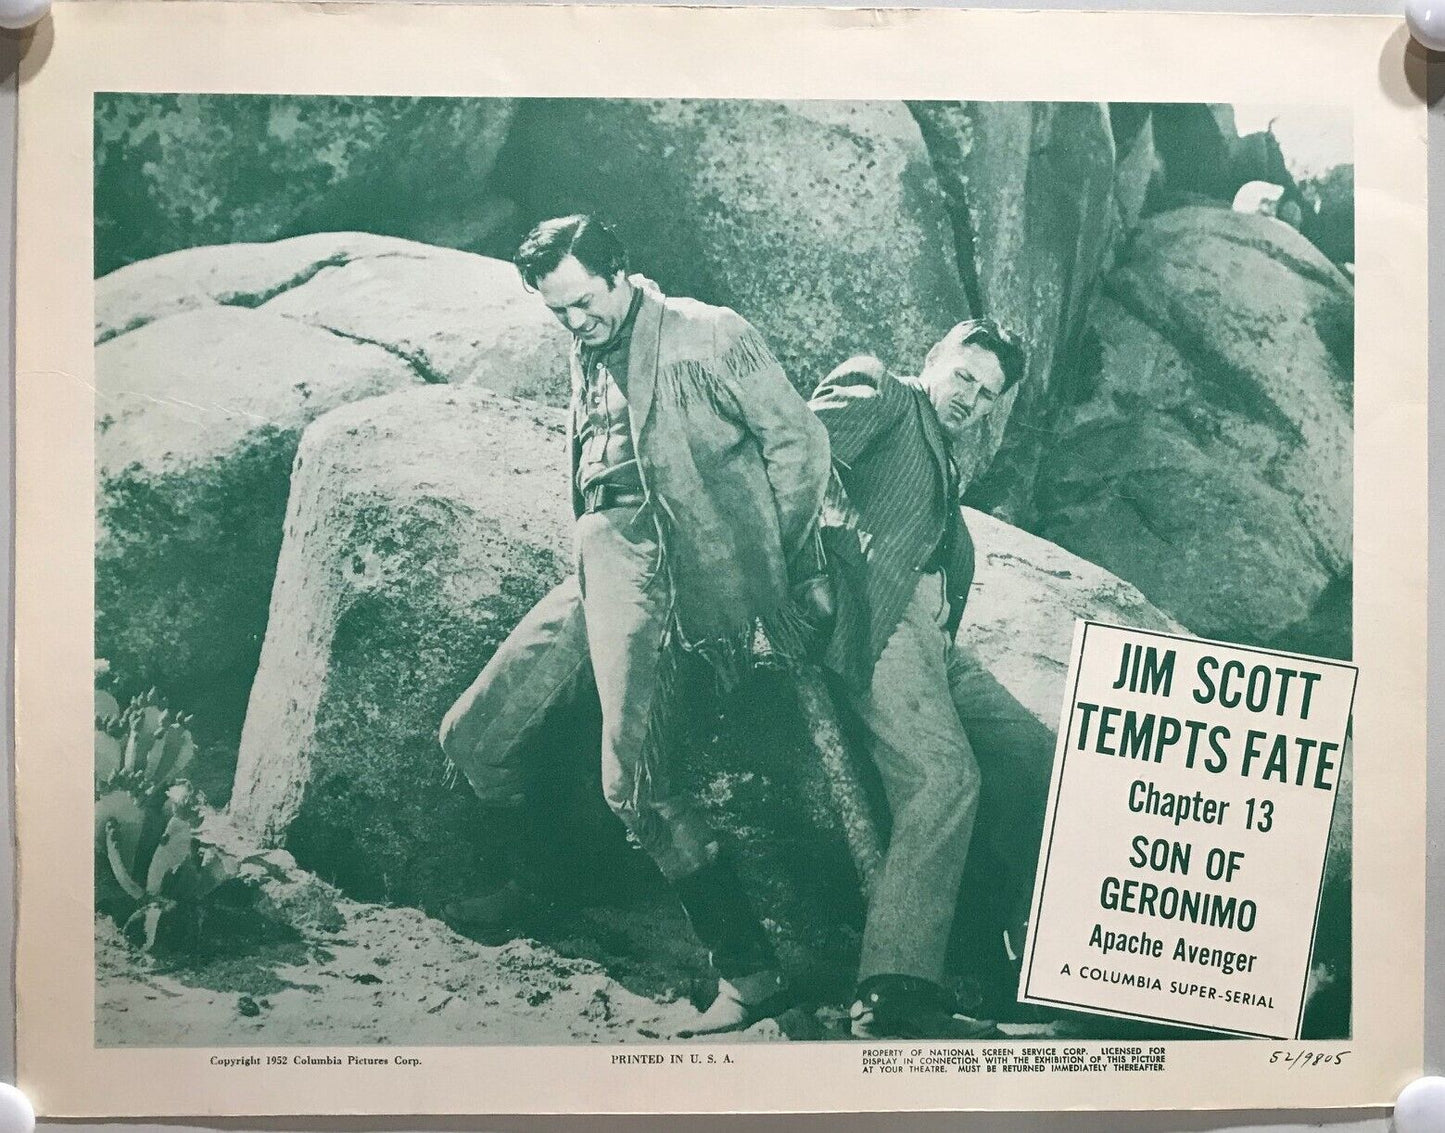 ORIGINAL SERIAL LOBBY CARD - SON OF GERONIMO (d) - 1952 - Ch 13 "Jim Scott Te...